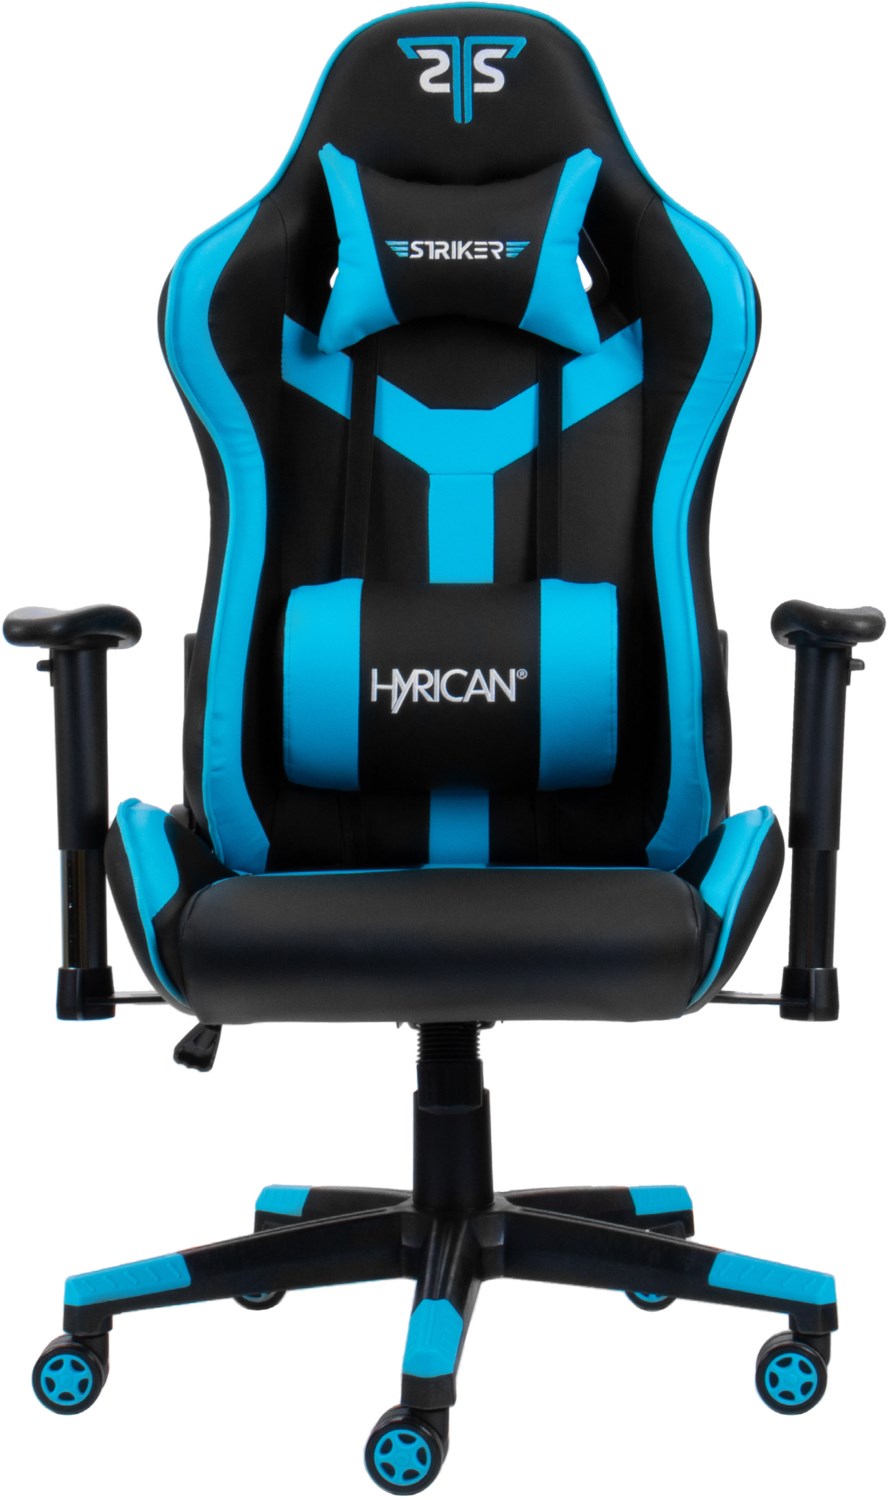 Striker Chair Hyrican Gaming | EURONICS